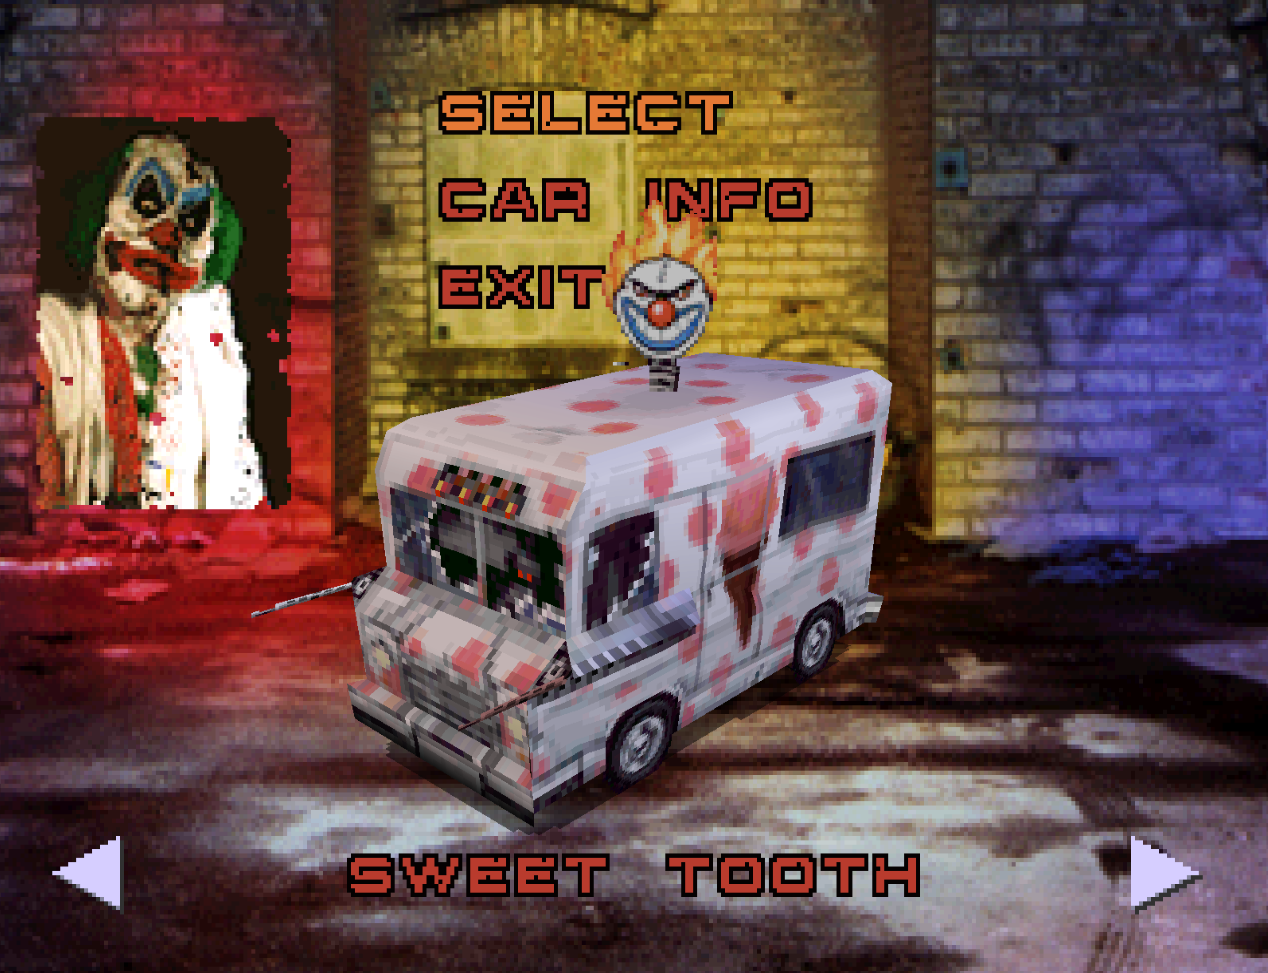 ice cream truck shooting game